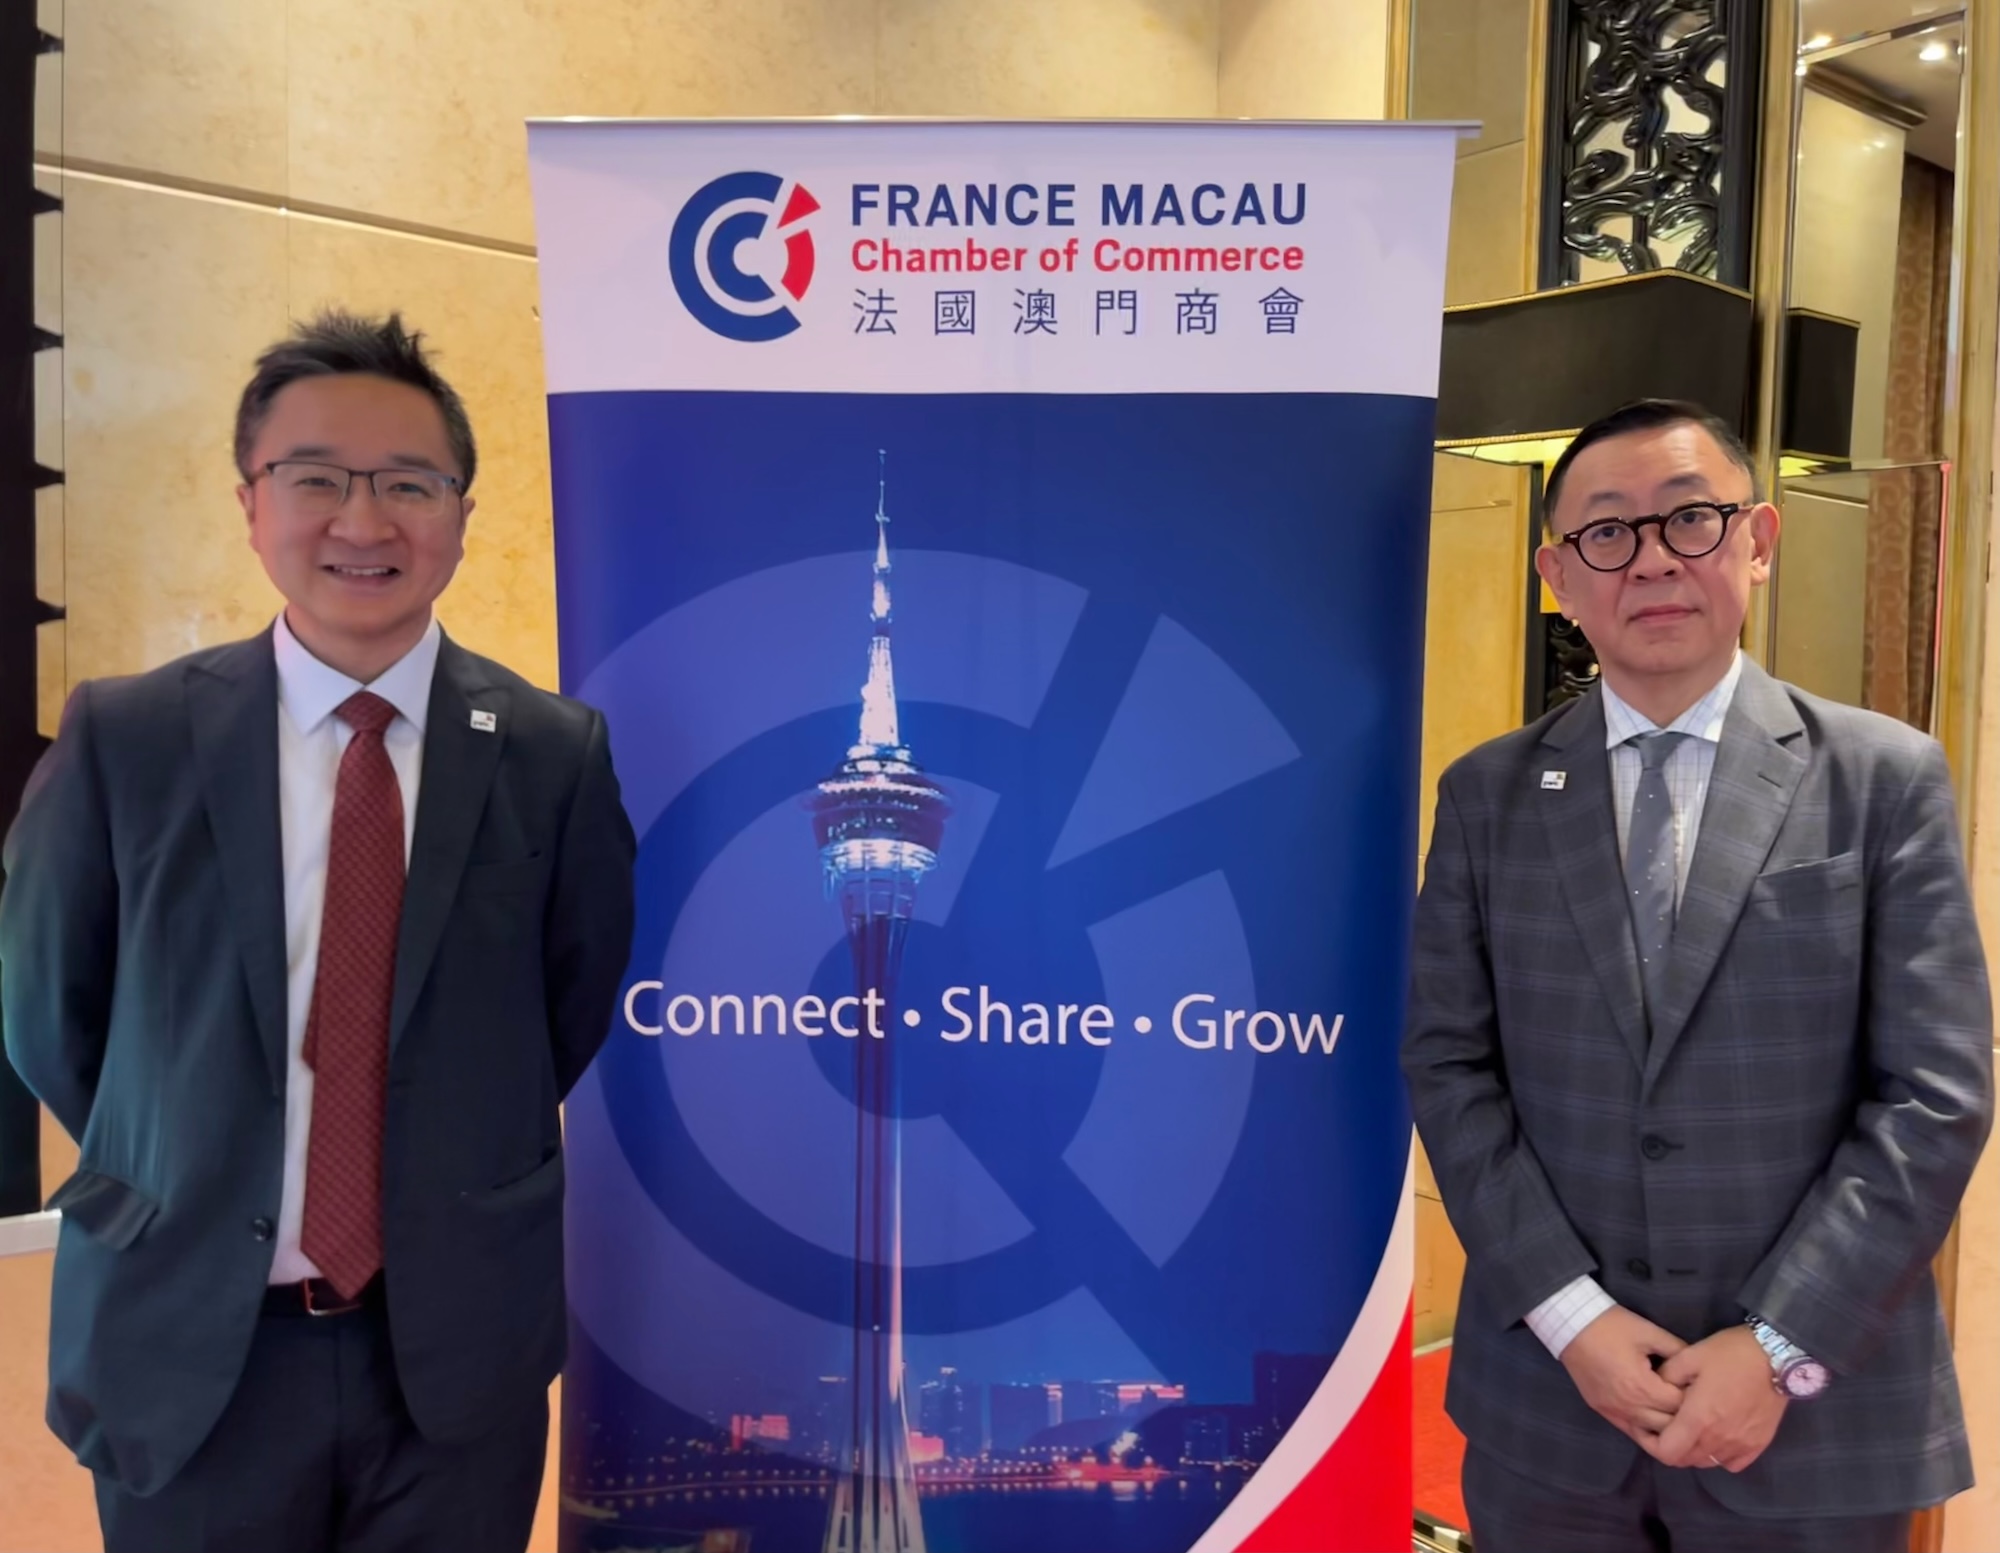 Breakfast meeting of the France Macau Chamber of Commerce